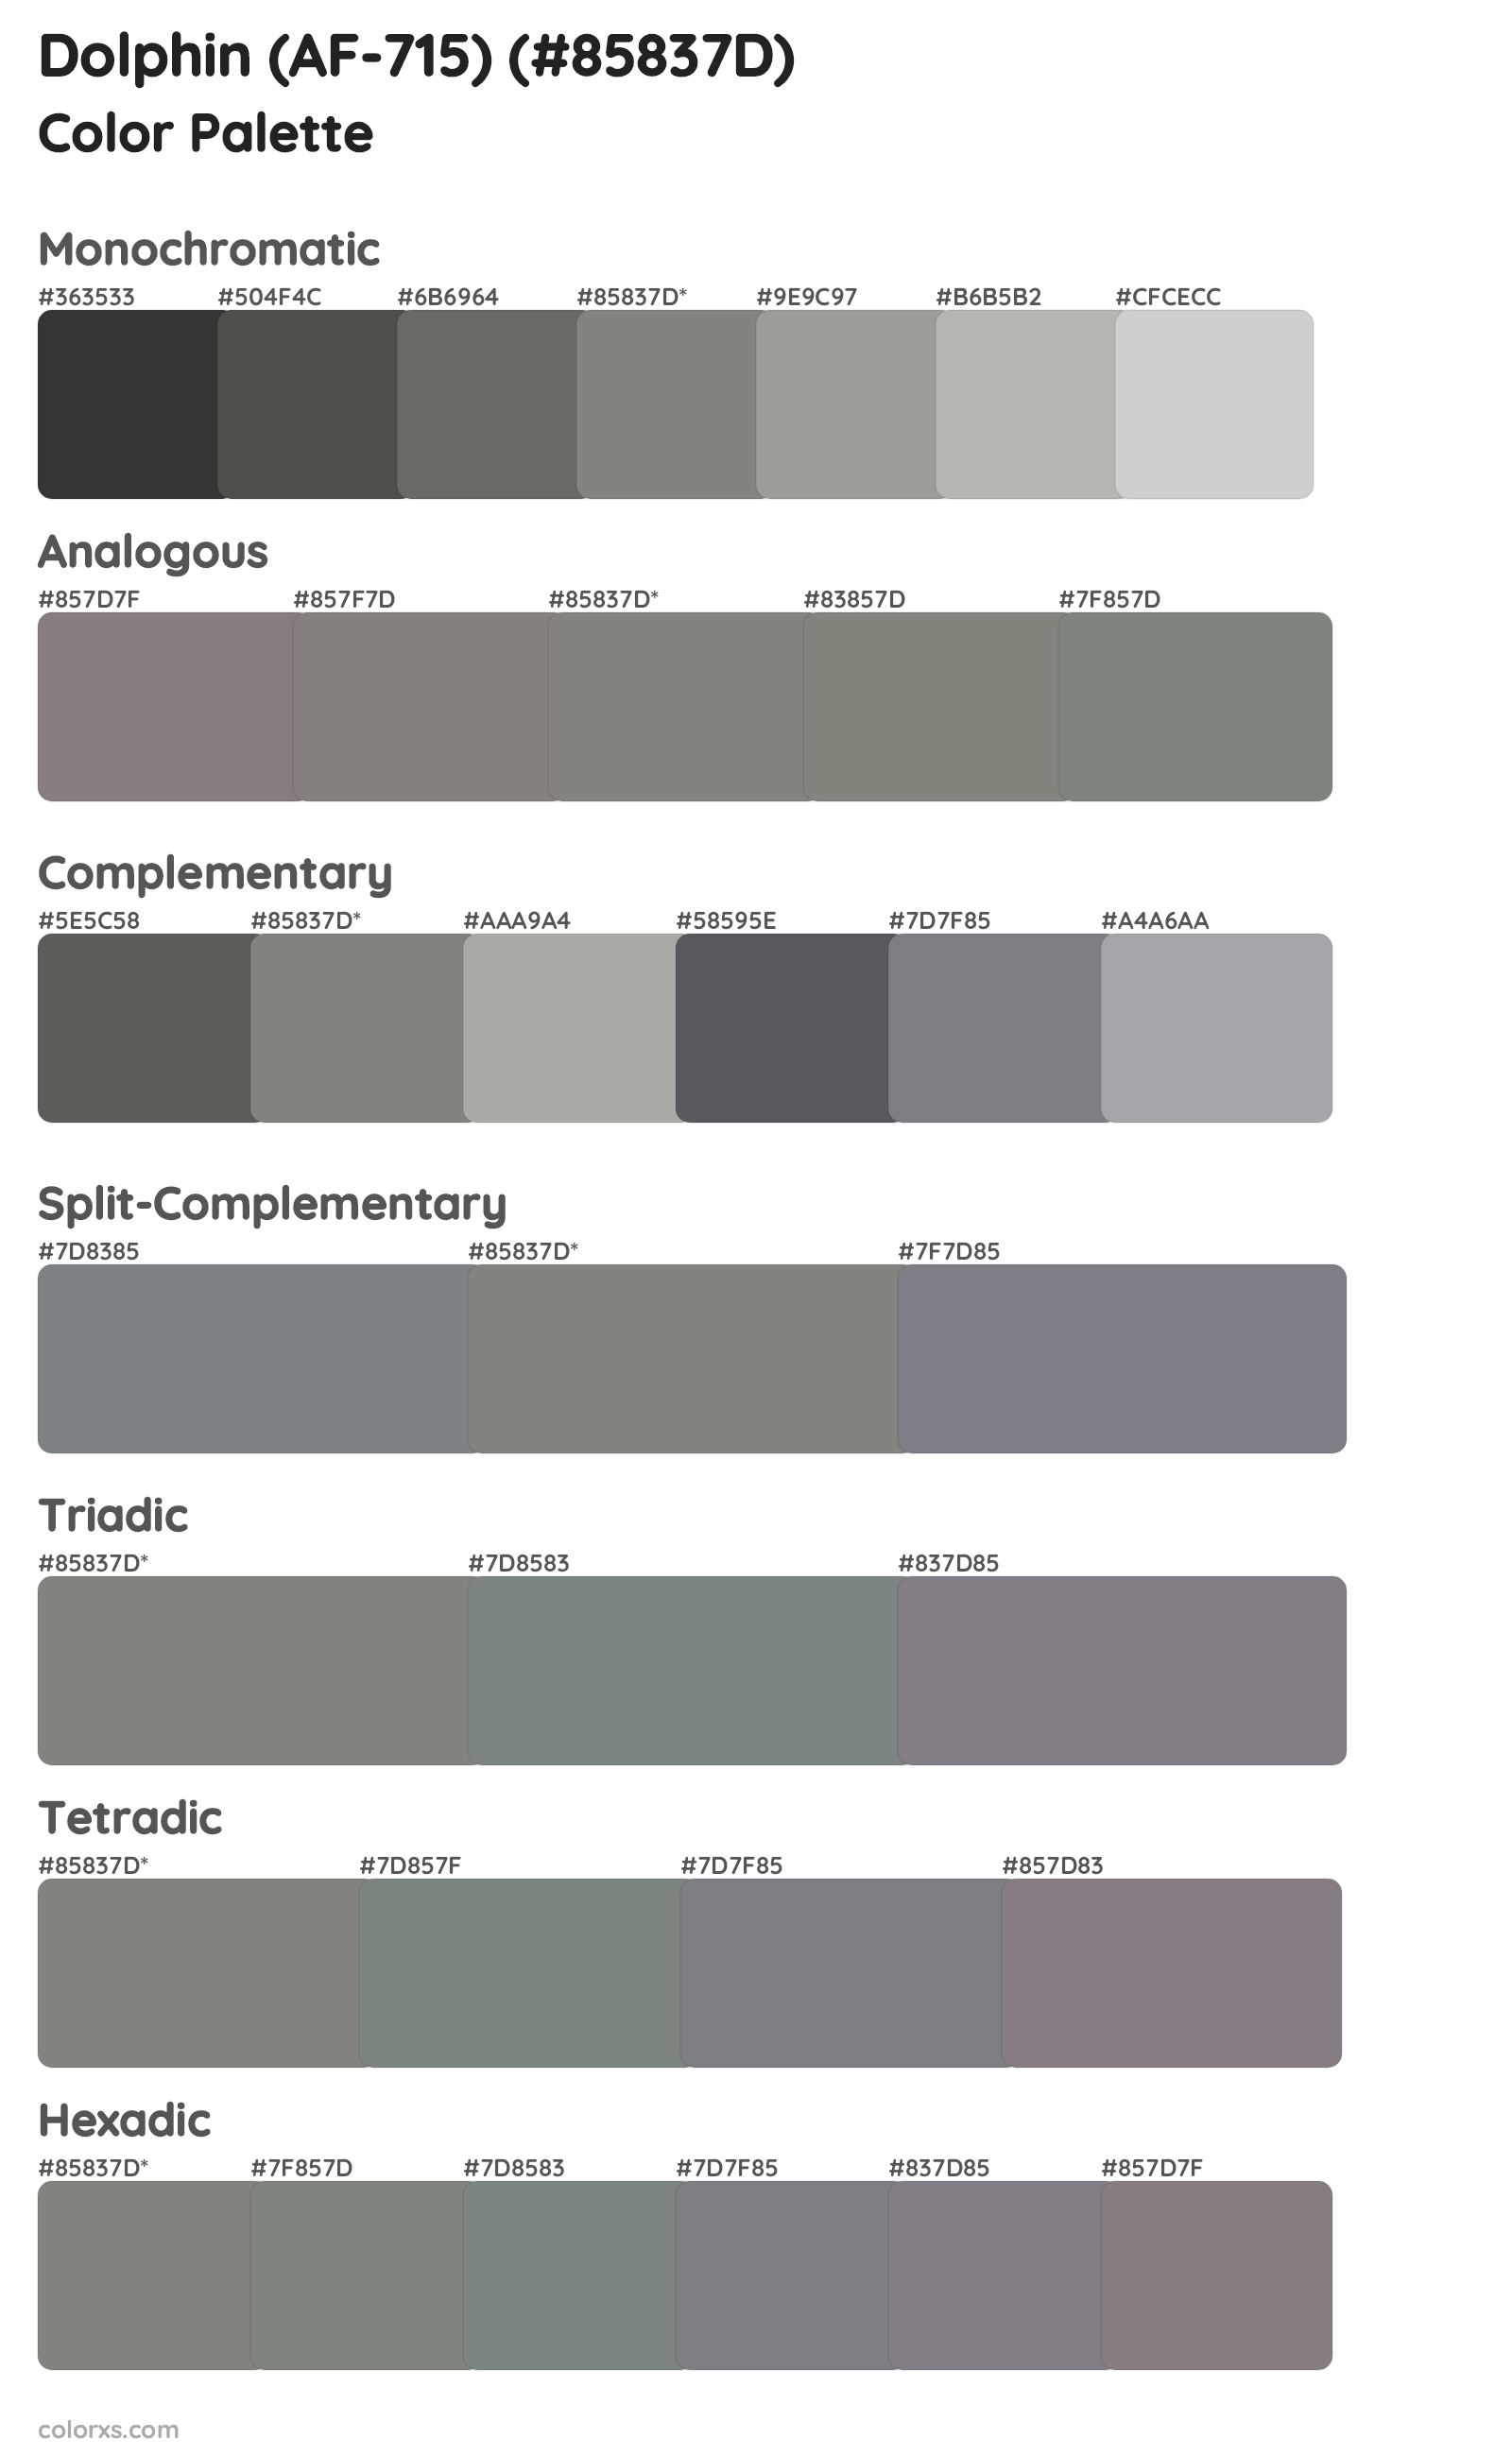 Dolphin (AF-715) Color Scheme Palettes